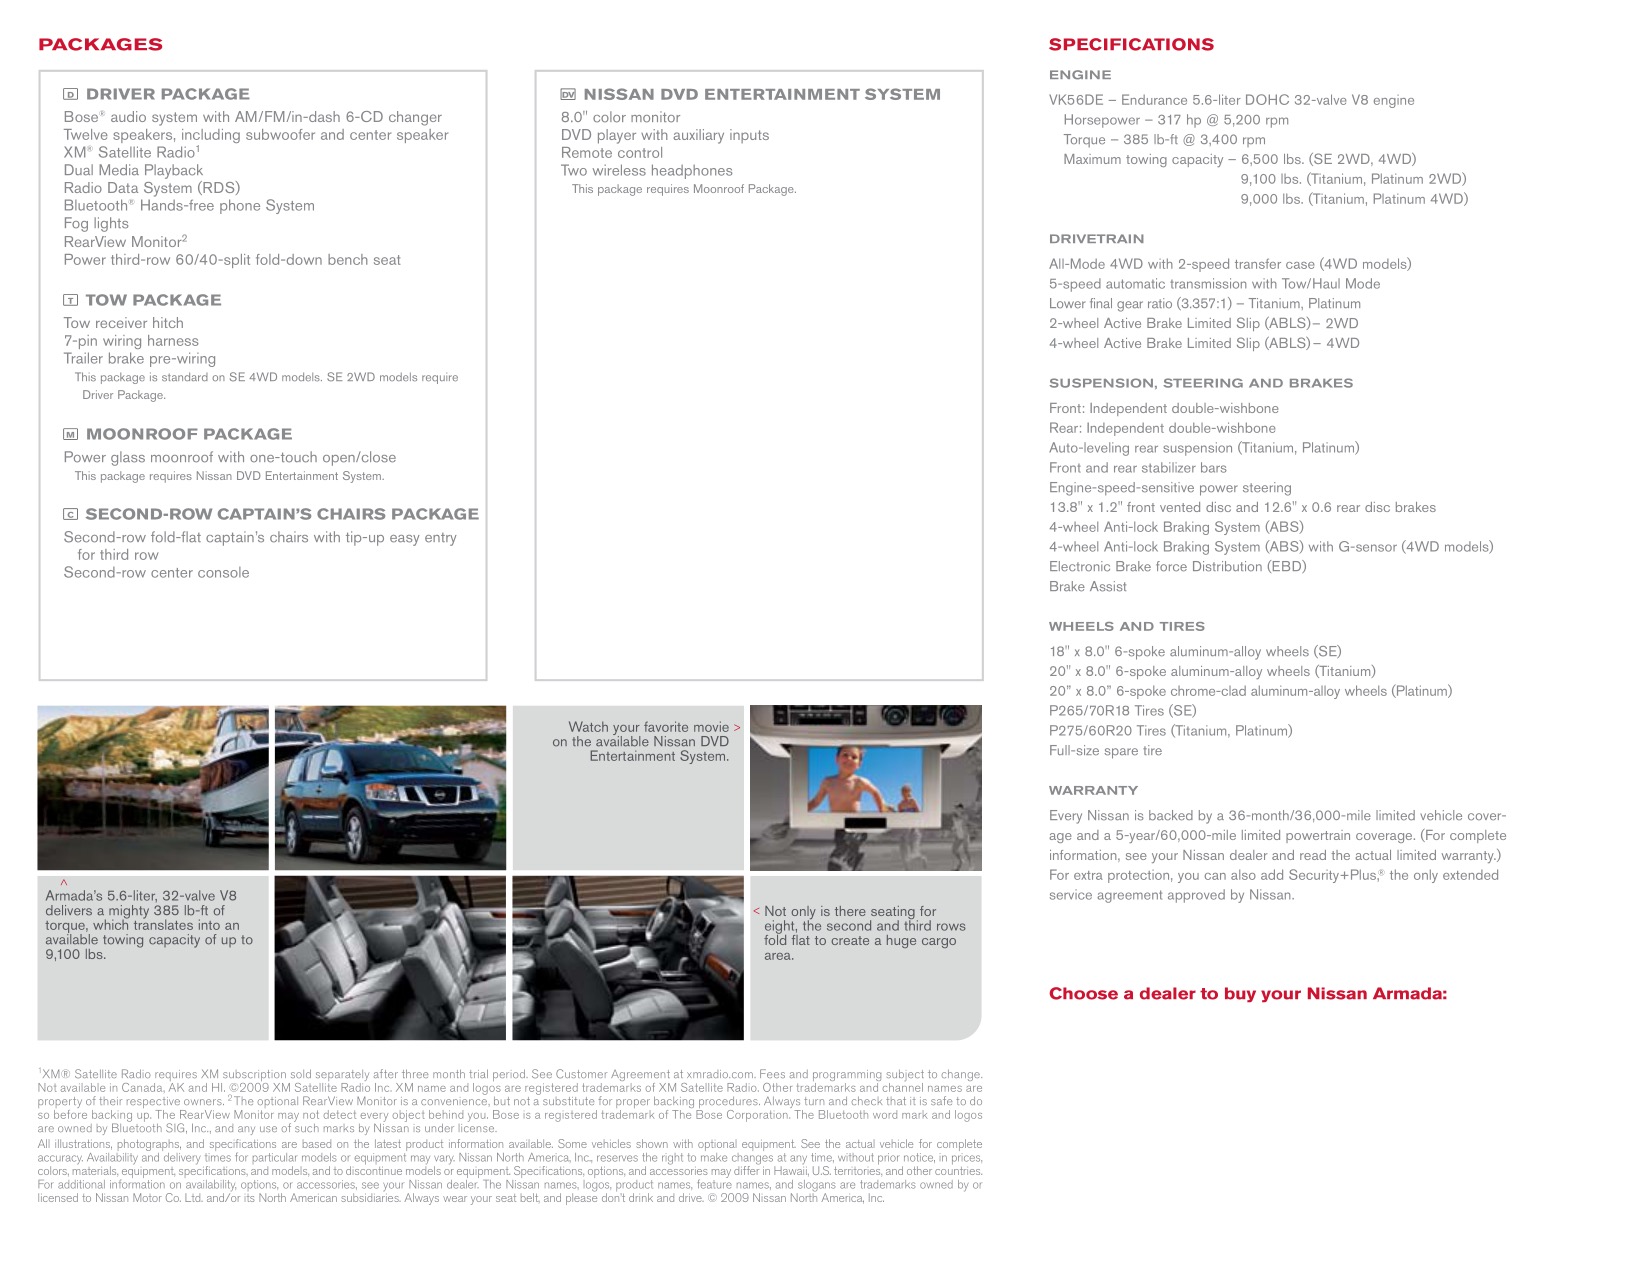 2010 Nissan Armada Brochure Page 2